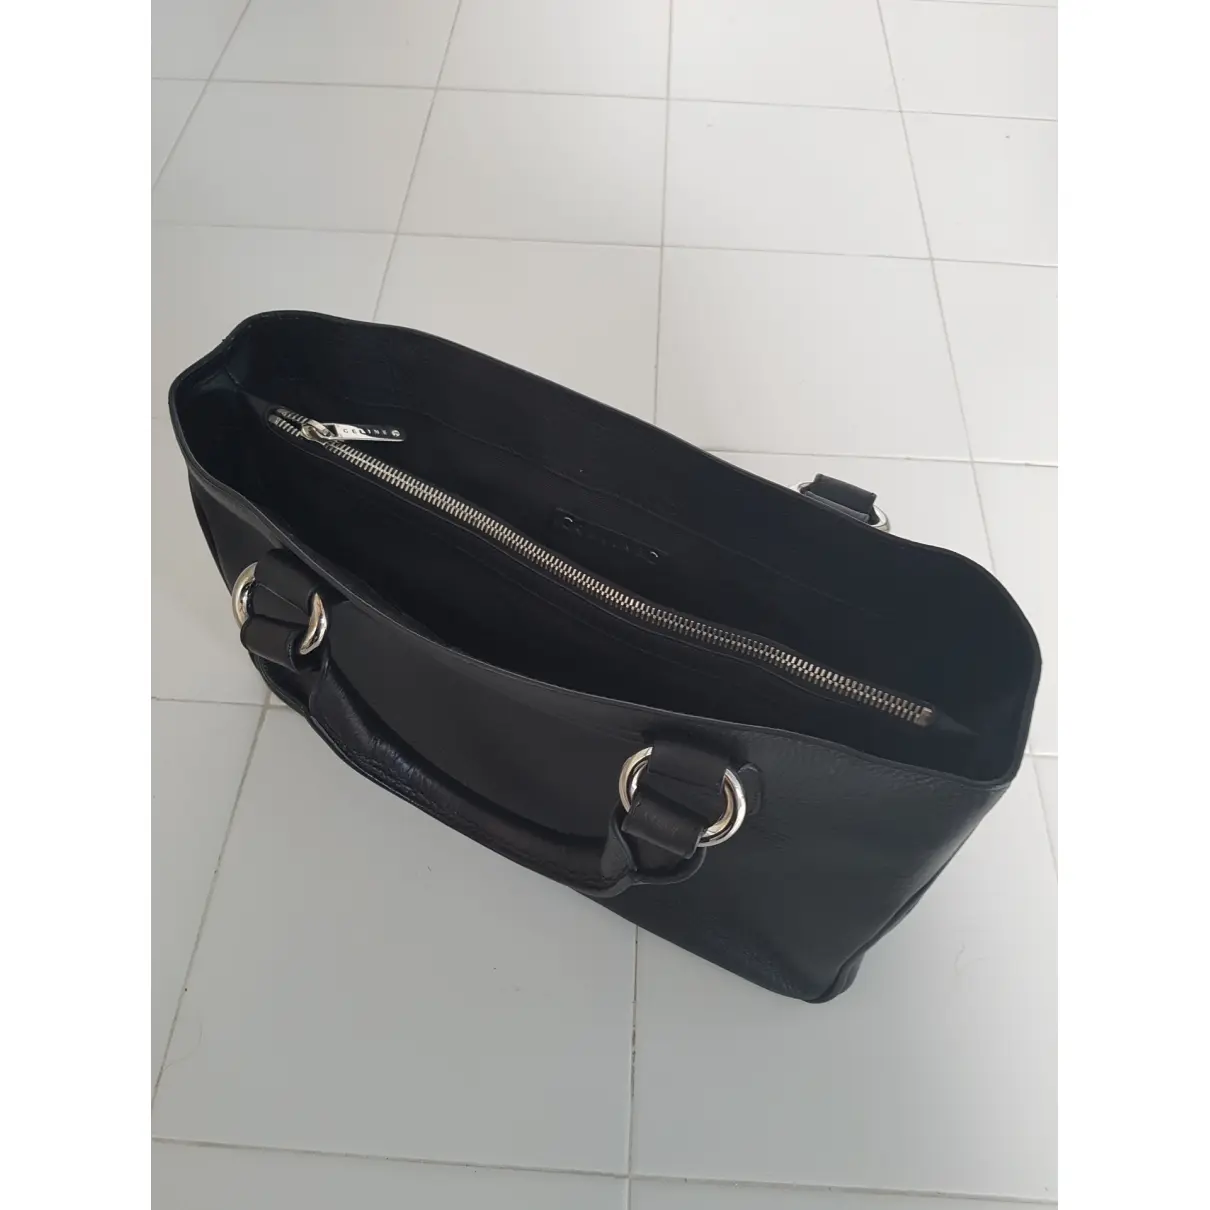 Buy Celine Boogie leather handbag online